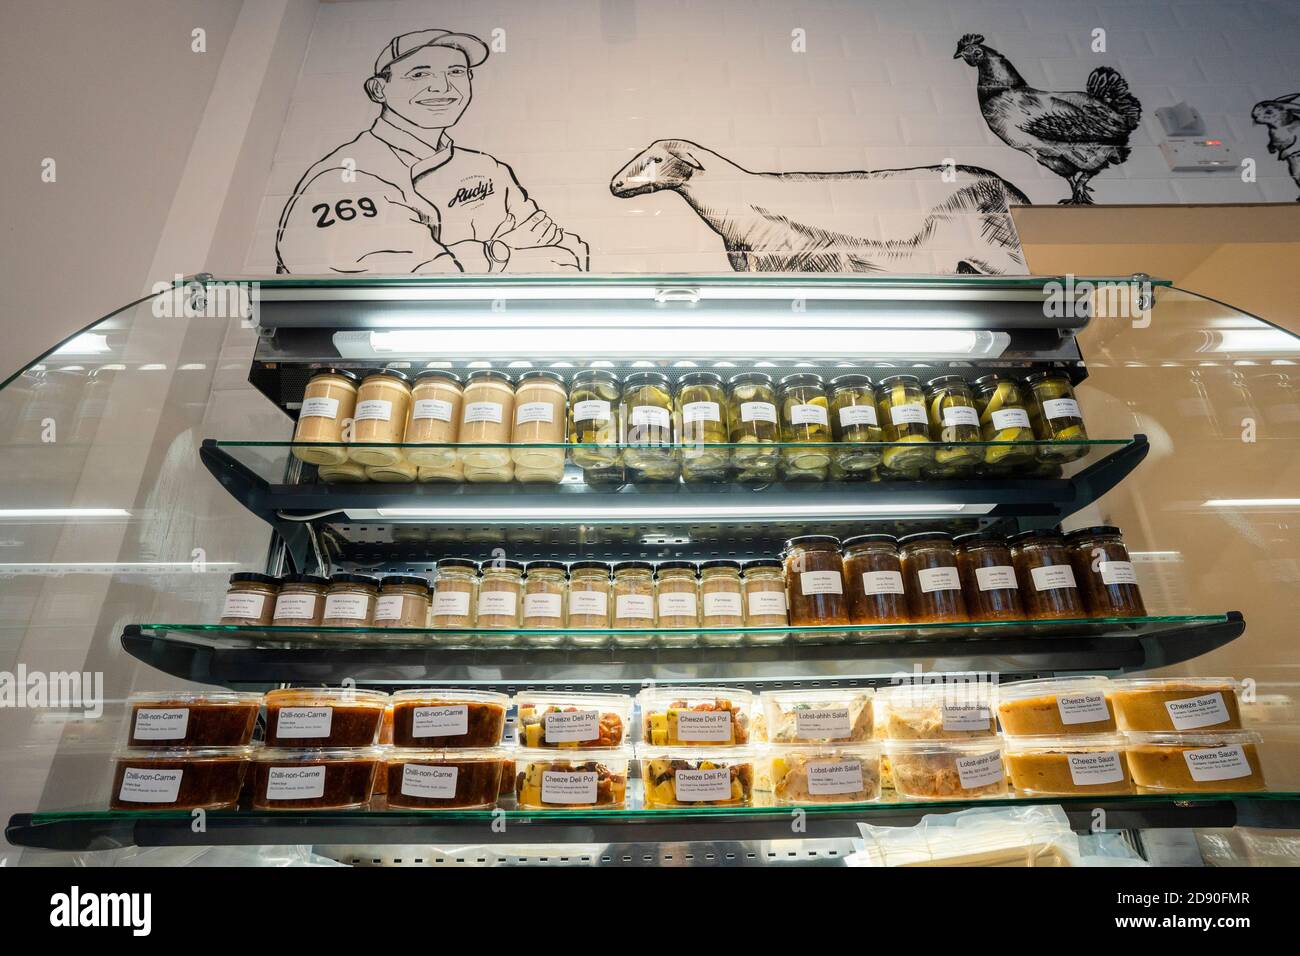 Rudys Vegan Butcher Delikatessen eröffnet in Islington London - ihr Kühlschrank mit grausamfreien Lebensmitteln. Stockfoto